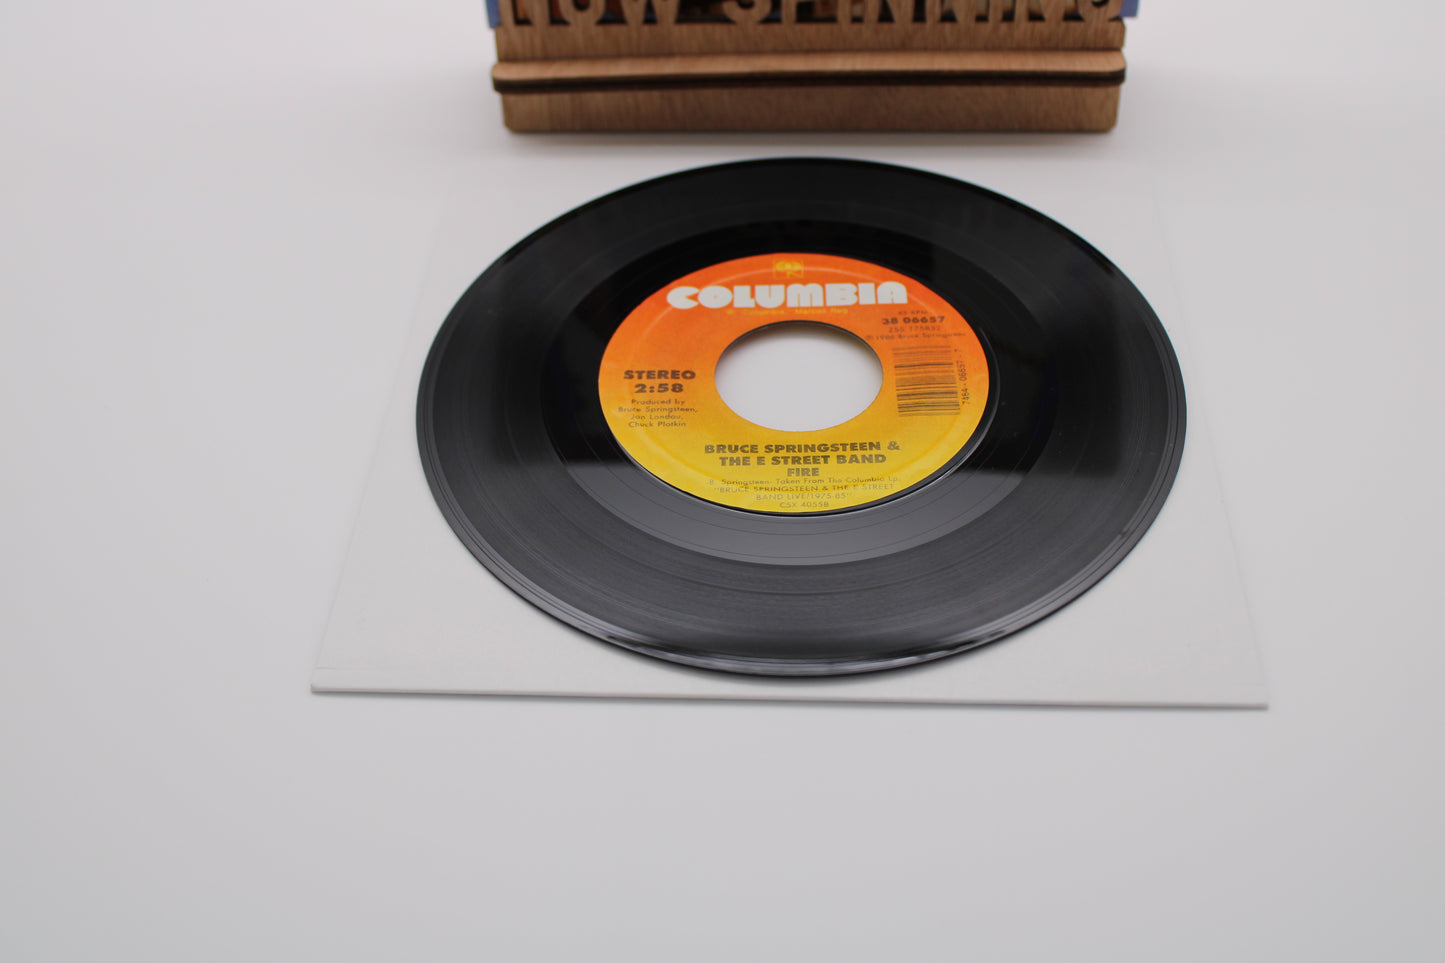 Bruce Springsteen - 45 Record - "Fire" - Vinyl Release + Picture Sleeve + Lyrics 1986